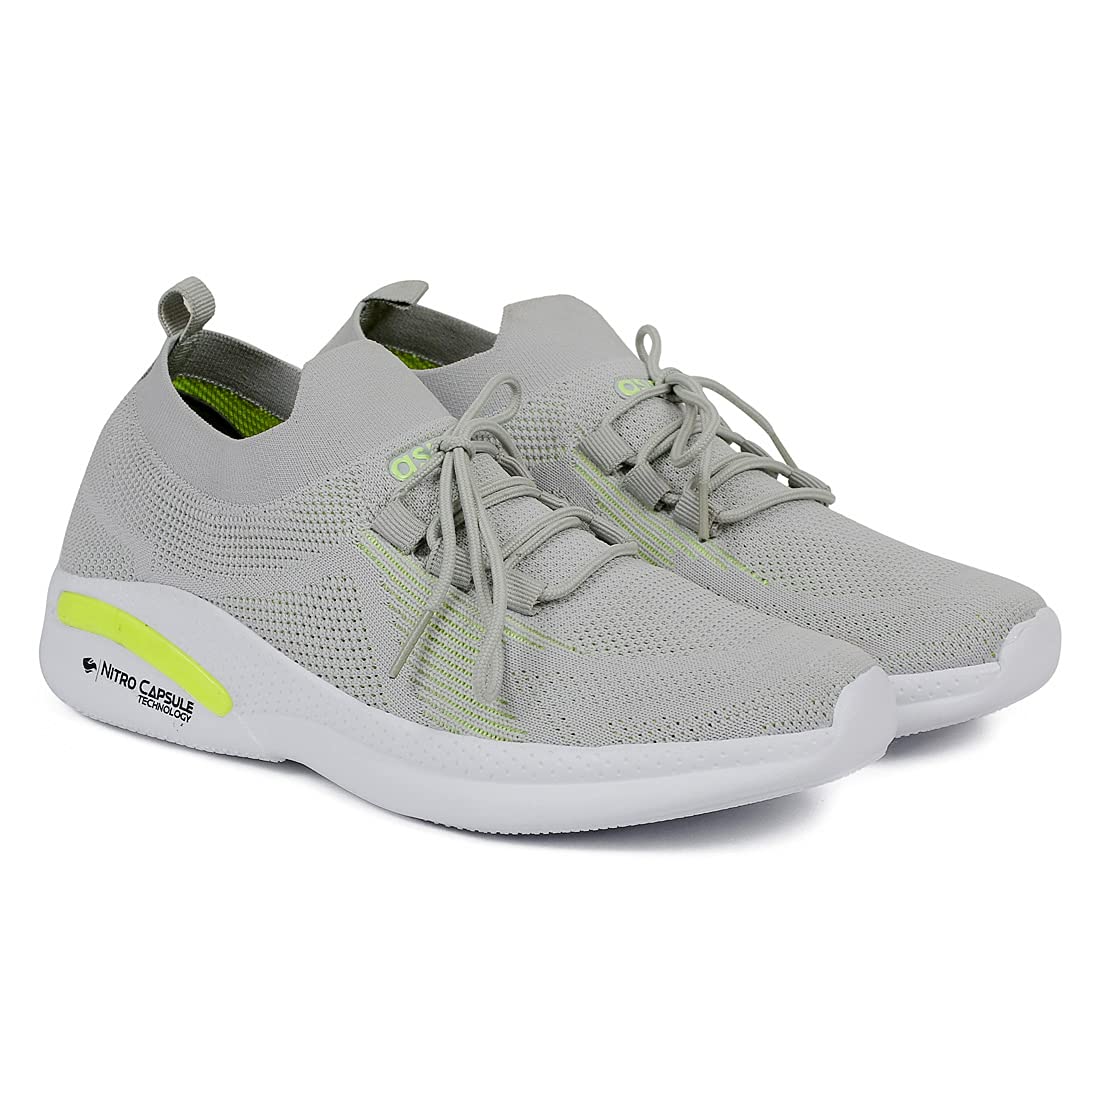 ASIAN Hattrick-21 Men's Sport Shoes | Ideal for Running, Walking & Gym |  Lightweight & Casual Sneaker Shoe for Men's & Women's